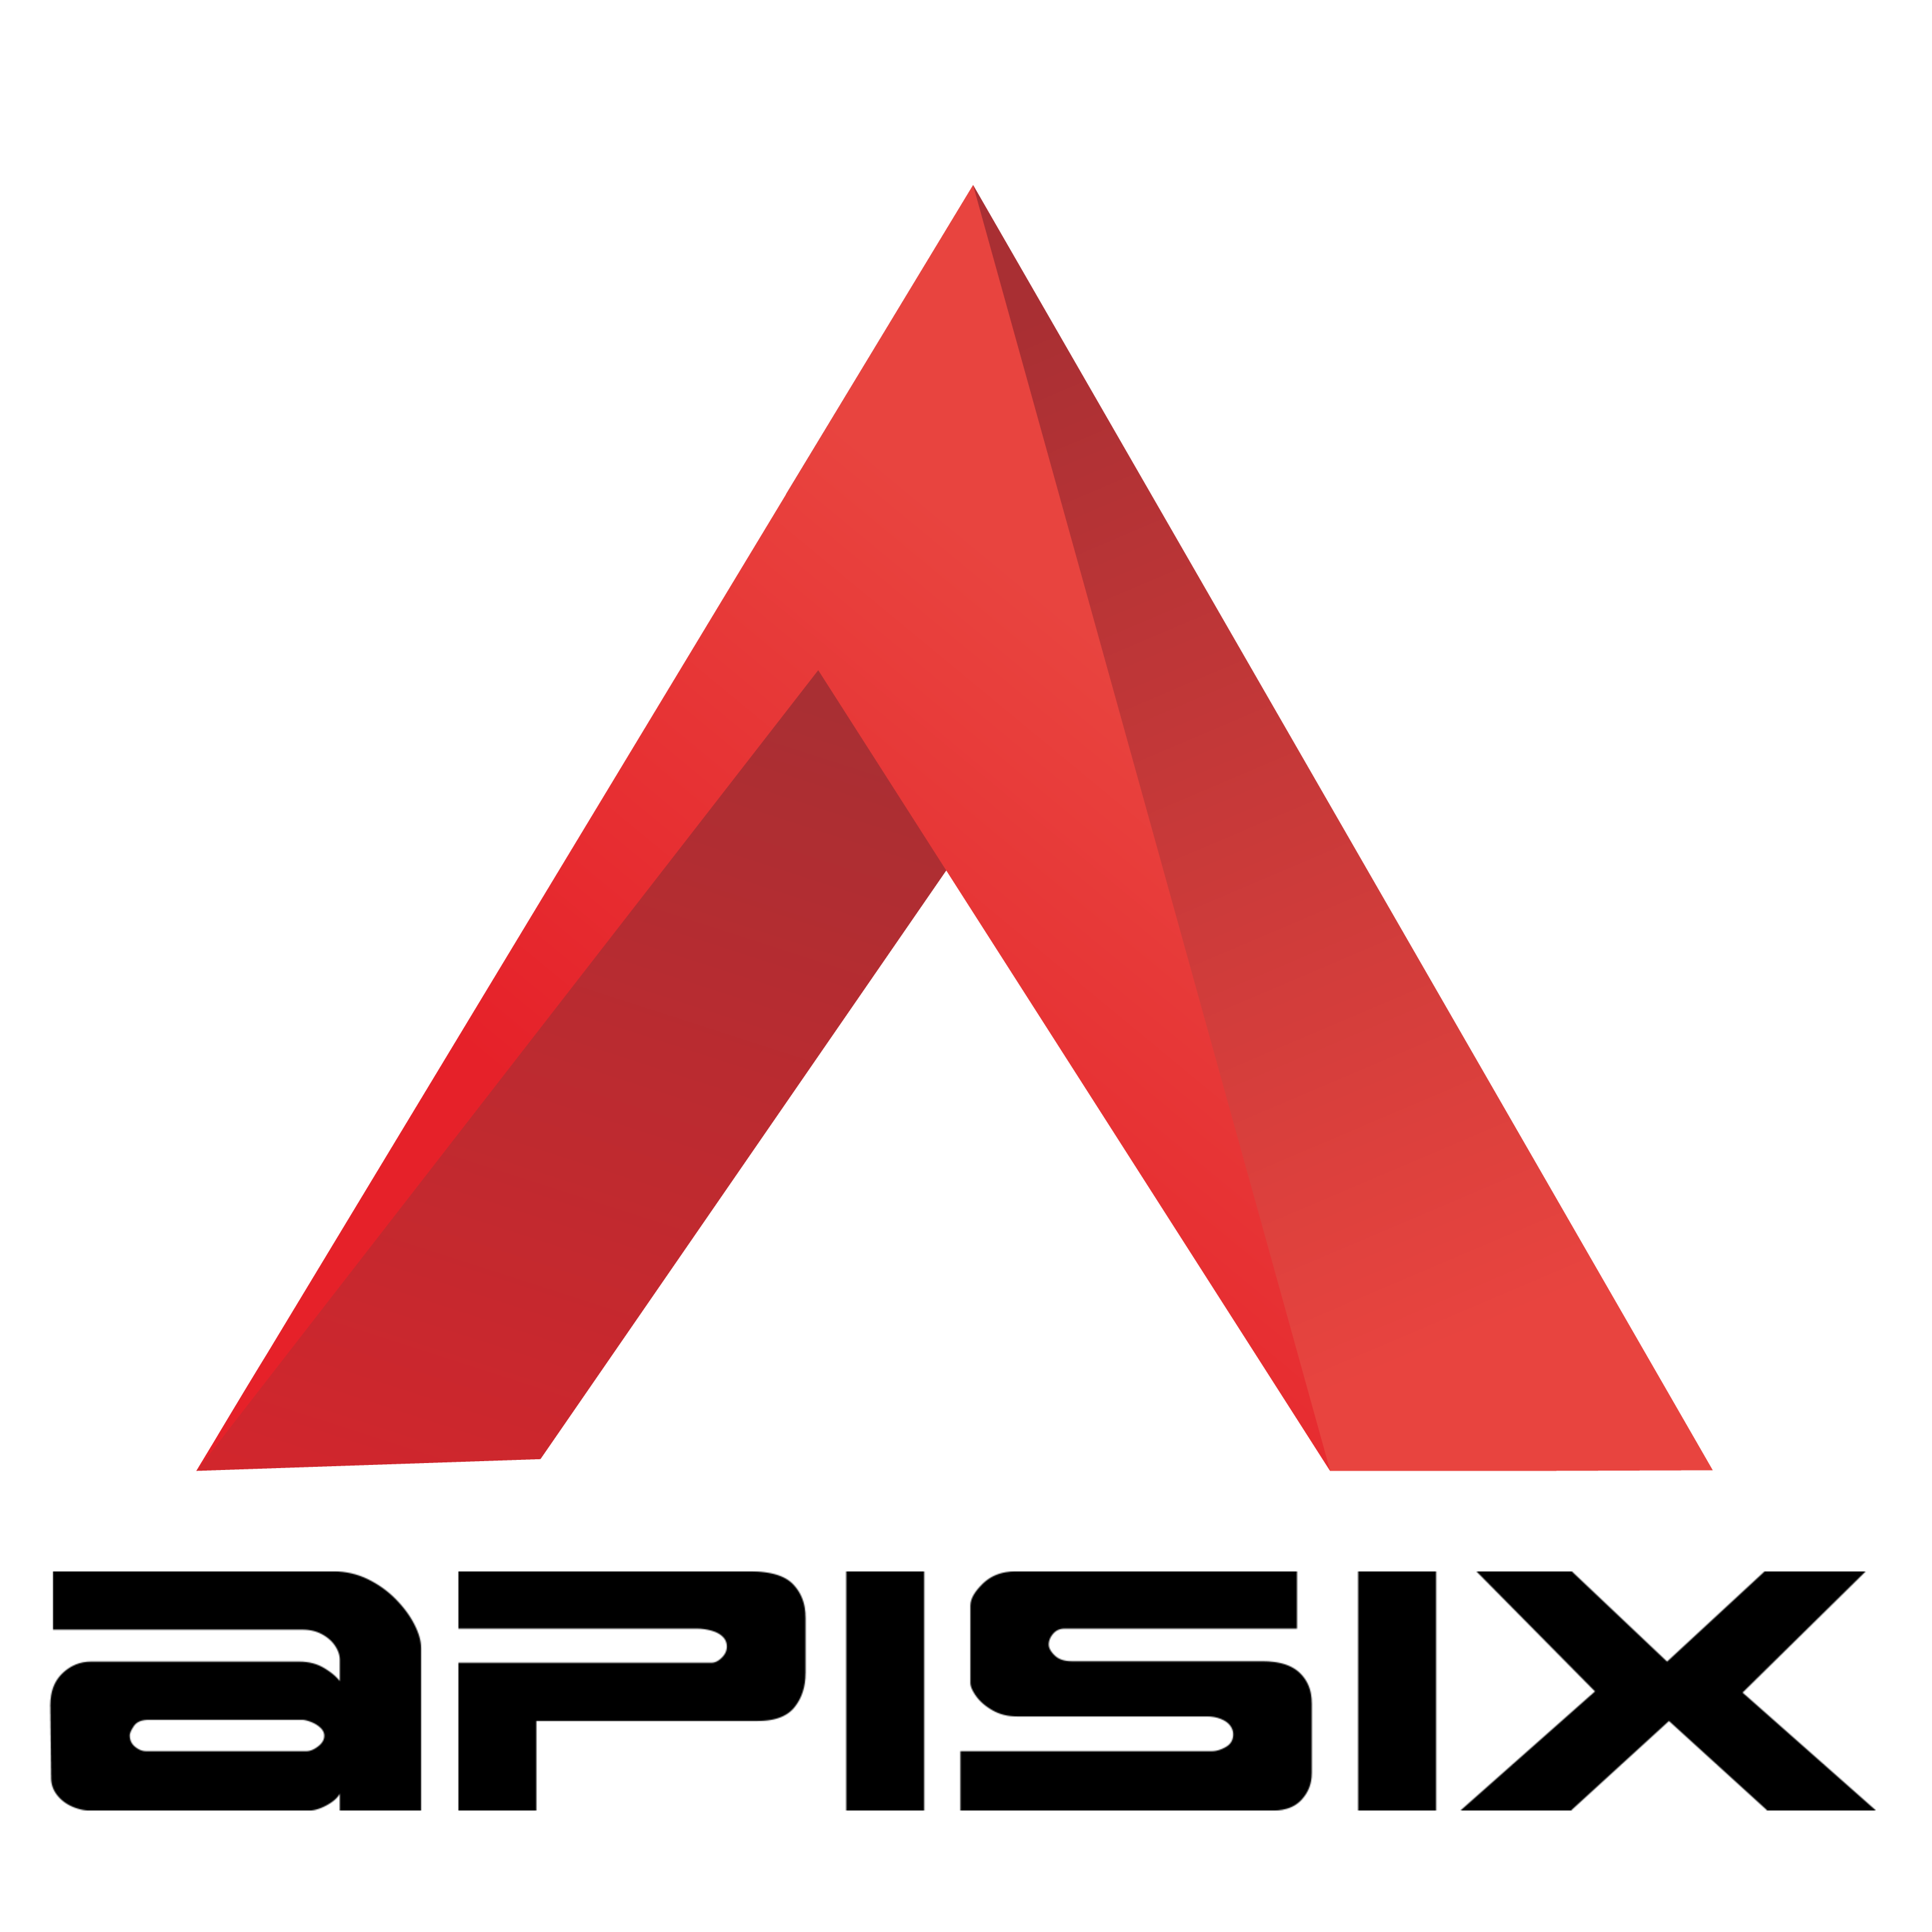 Apache APISIX logo